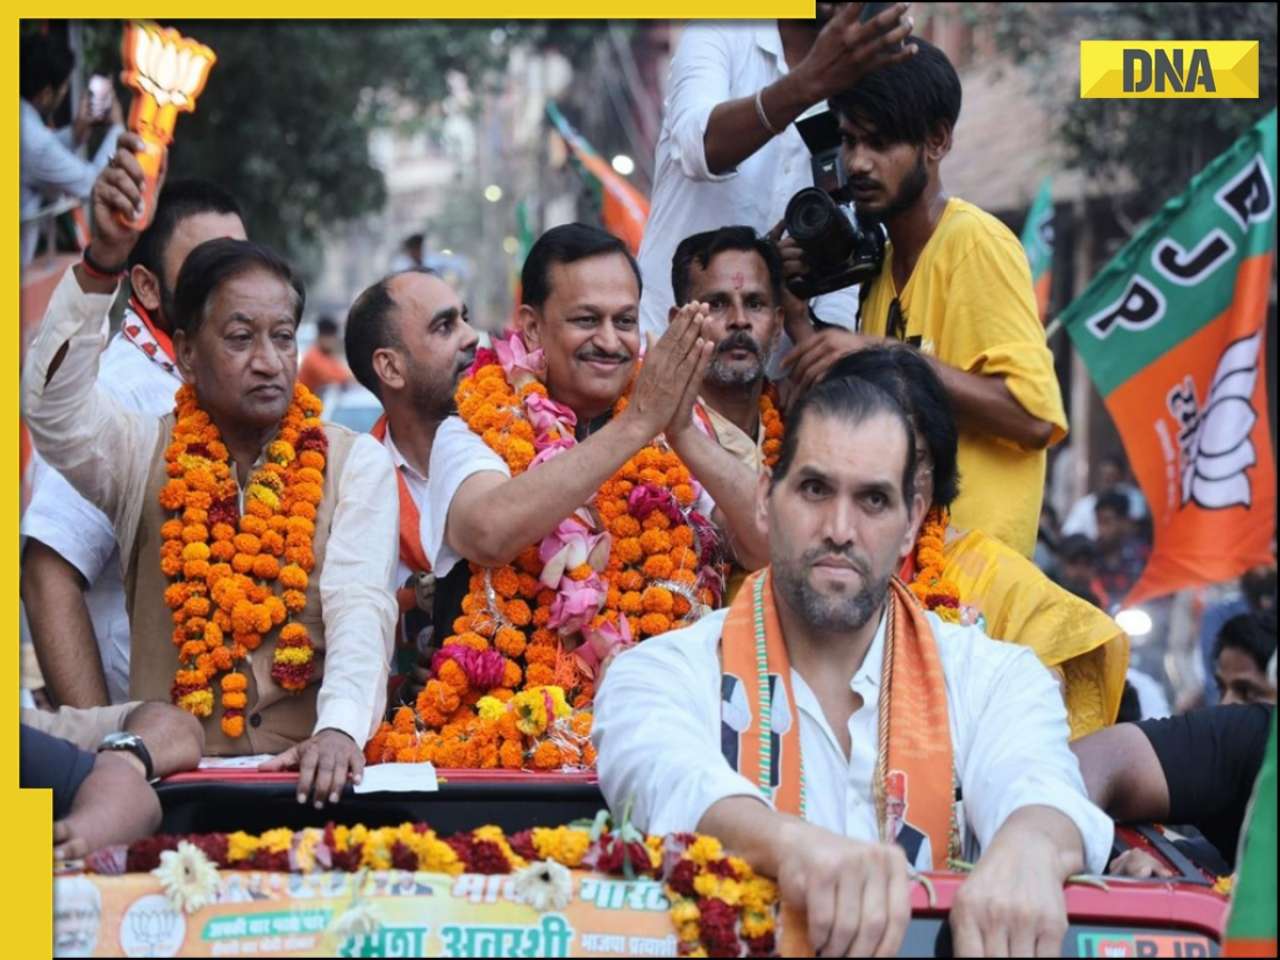 'Ramesh Awasthi Ke Samman Mein, Great Khali Maidaan Mein', top wresteler's road show for BJP candidate draws huge crowd